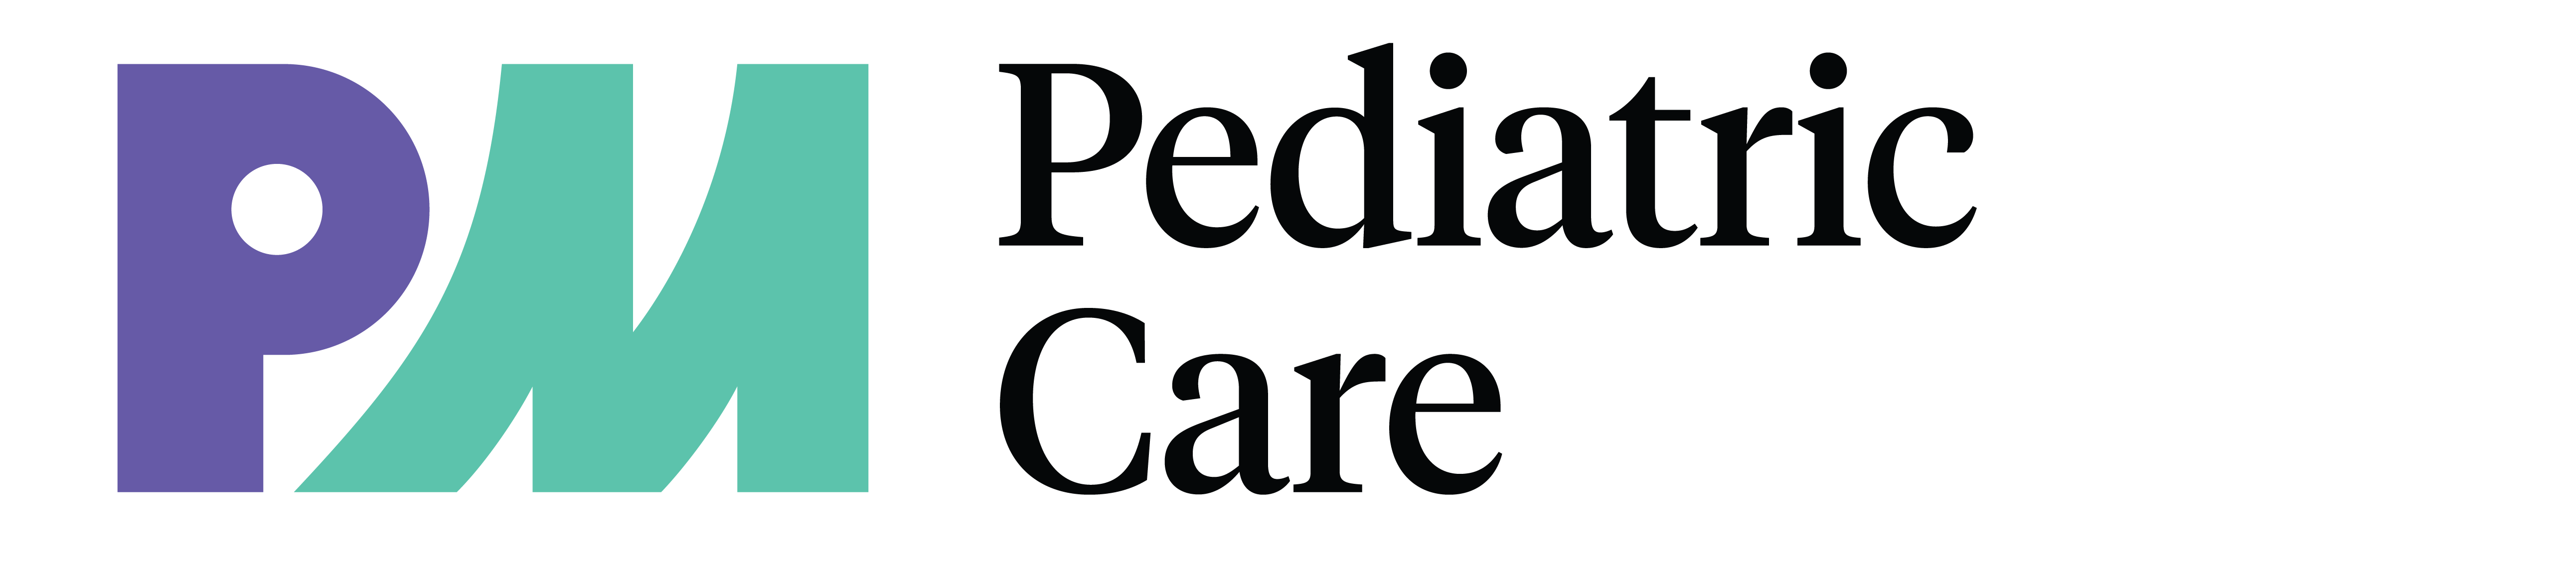 PM-Pediatric-Care-CMYK (1)